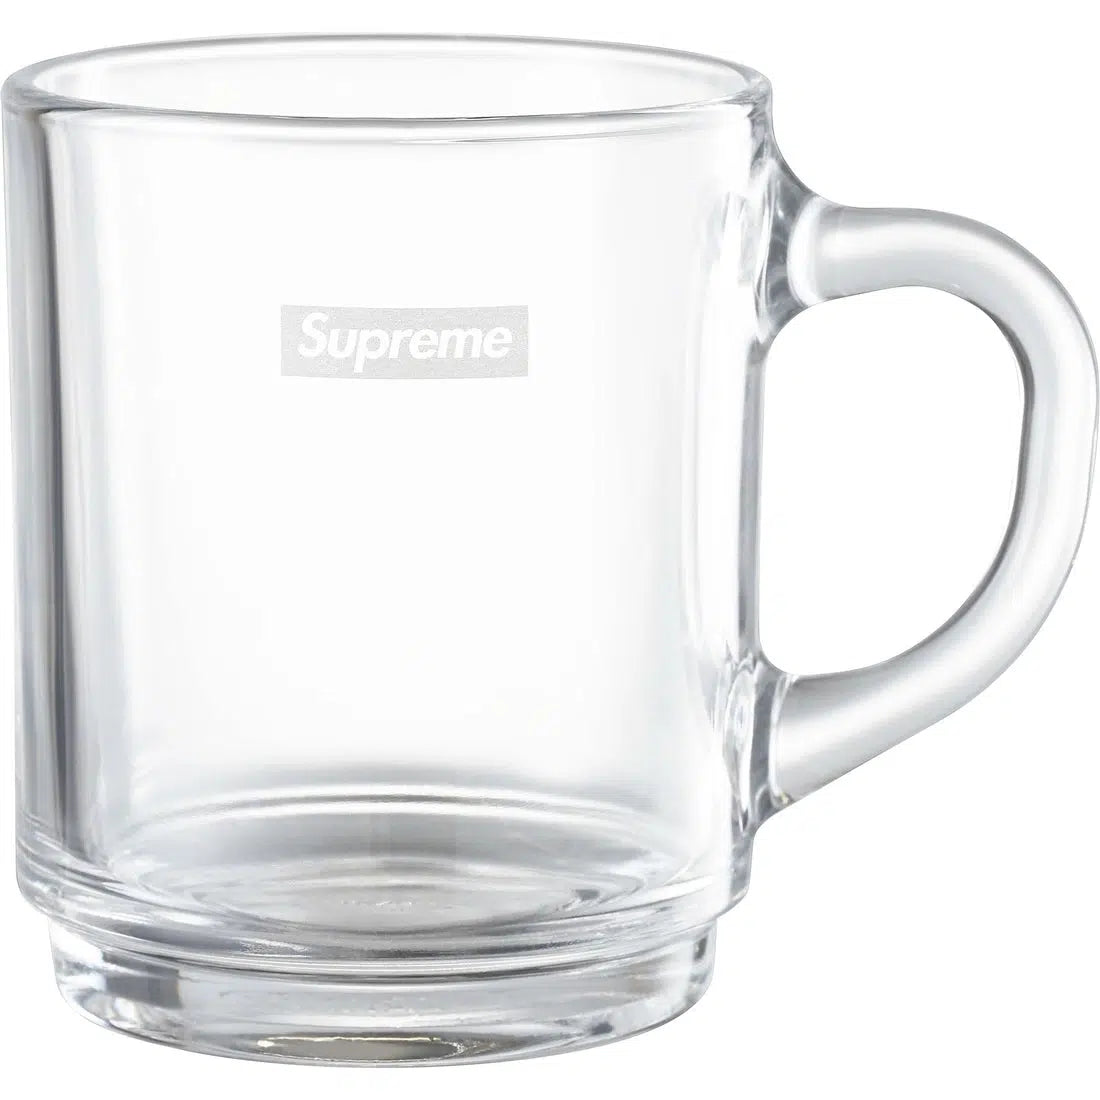 Buy SUPREME®/DURALEX GLASS MUGS (SET OF 6) Online - Waves Never Die